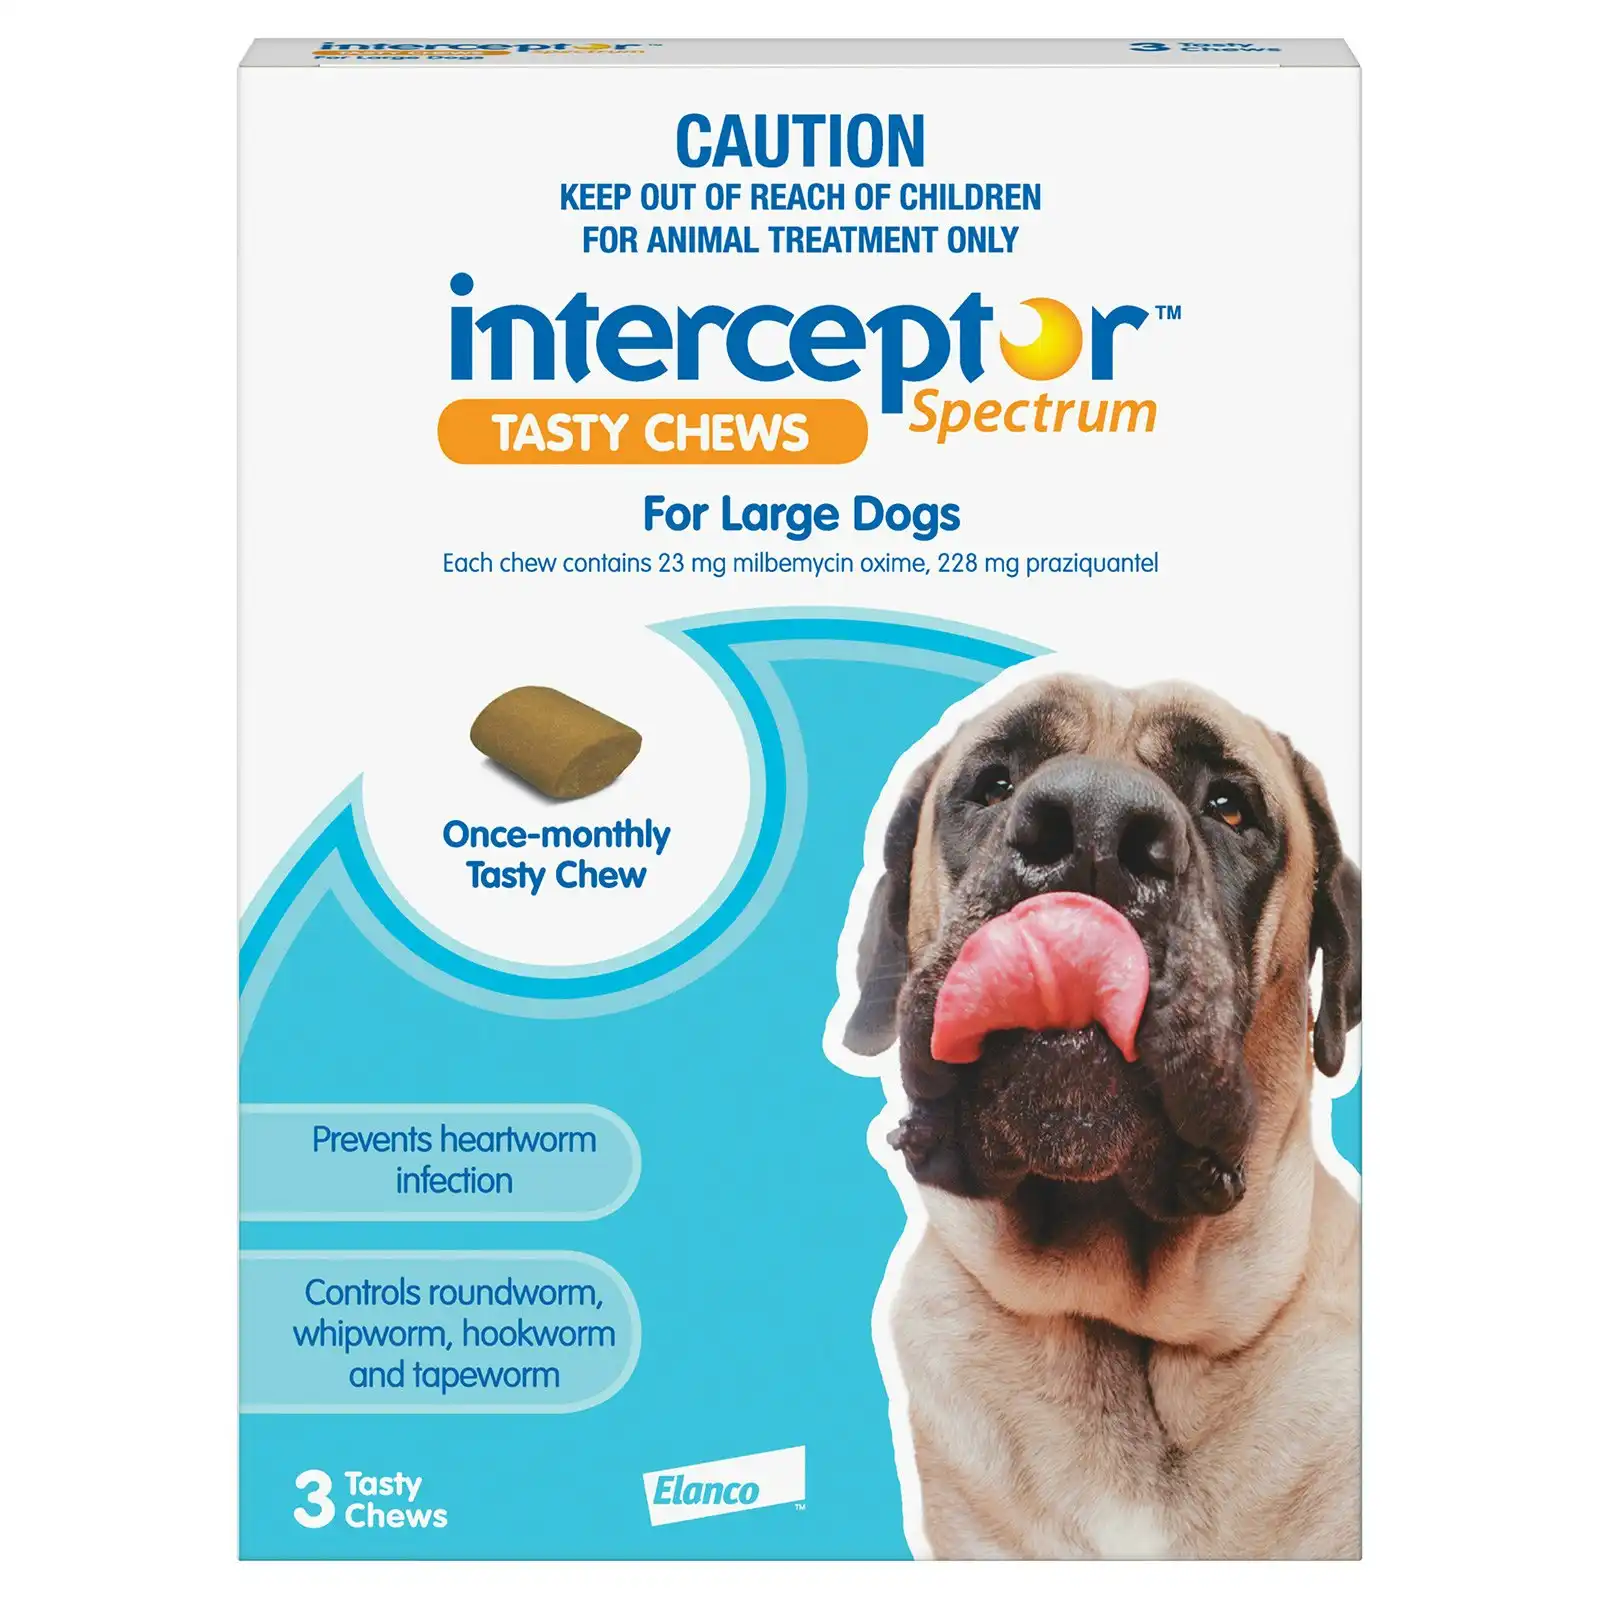 Interceptor Spectrum Tasty Chews For Large Dogs 22 To 45Kg (Blue) 12 Chews